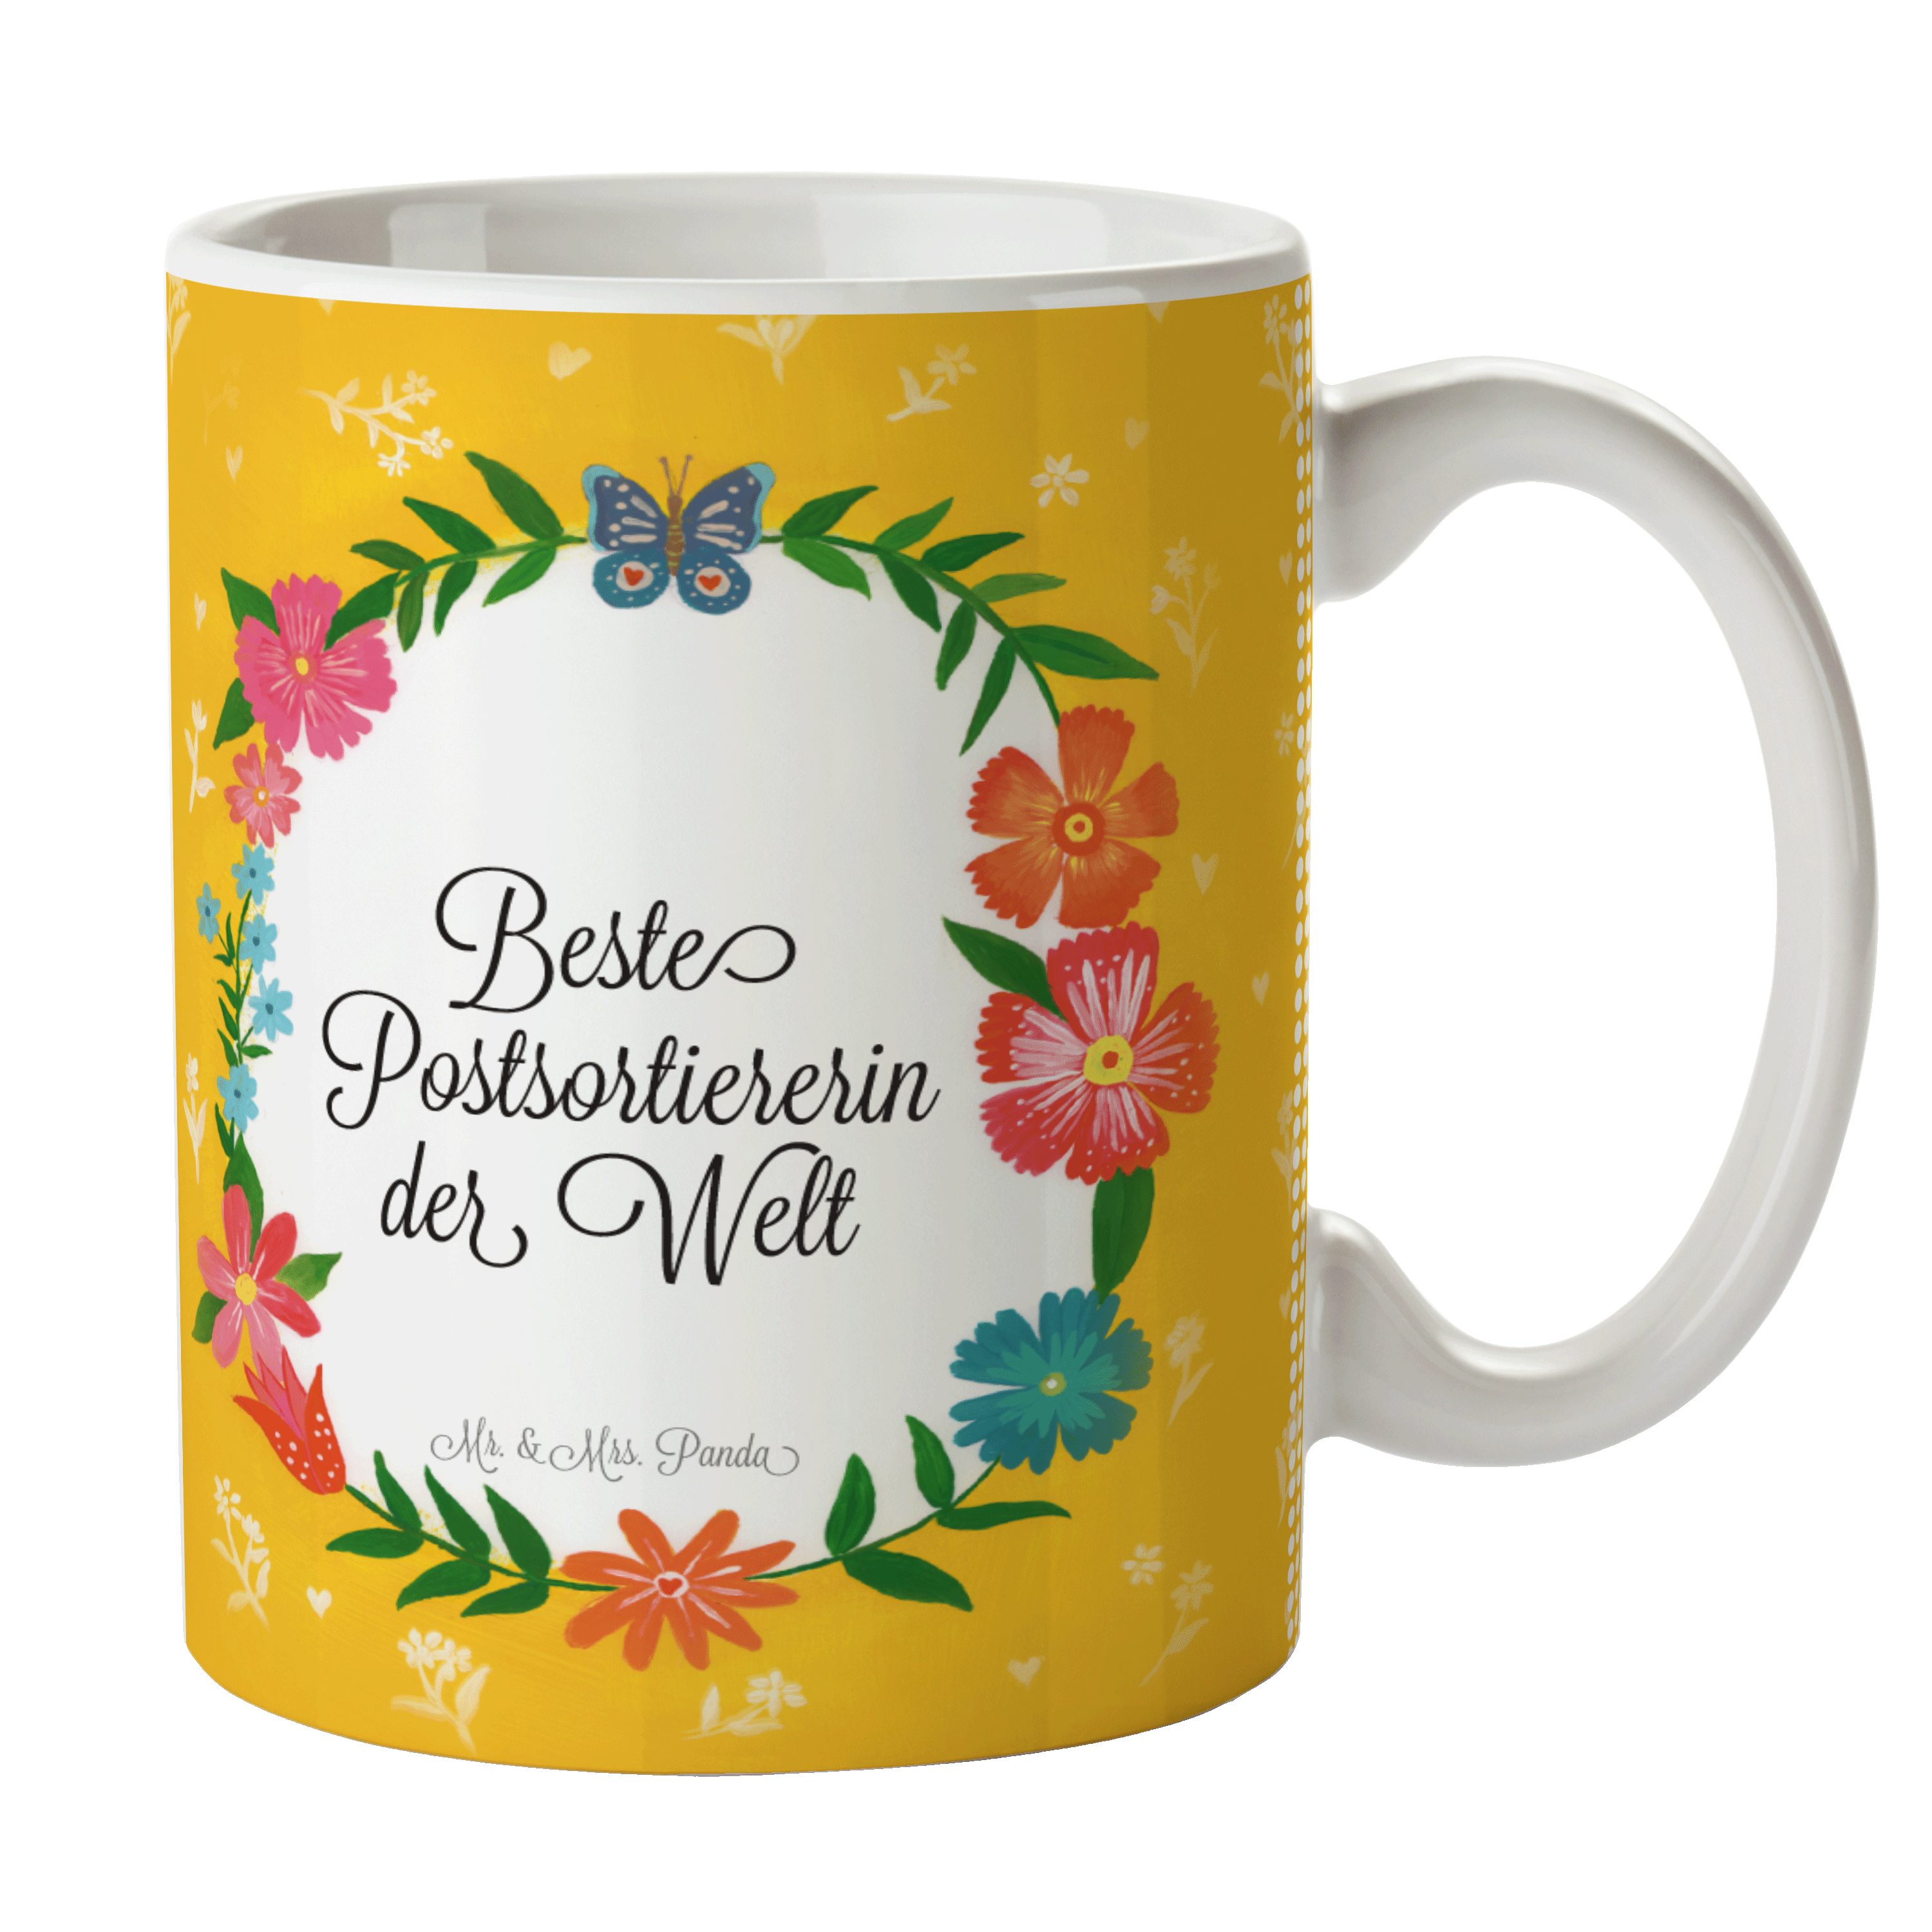 Mr. & Mrs. Panda Tasse Kaffeet, - Keramik Porzellantasse, Berufsausbildung, Postsortiererin Geschenk